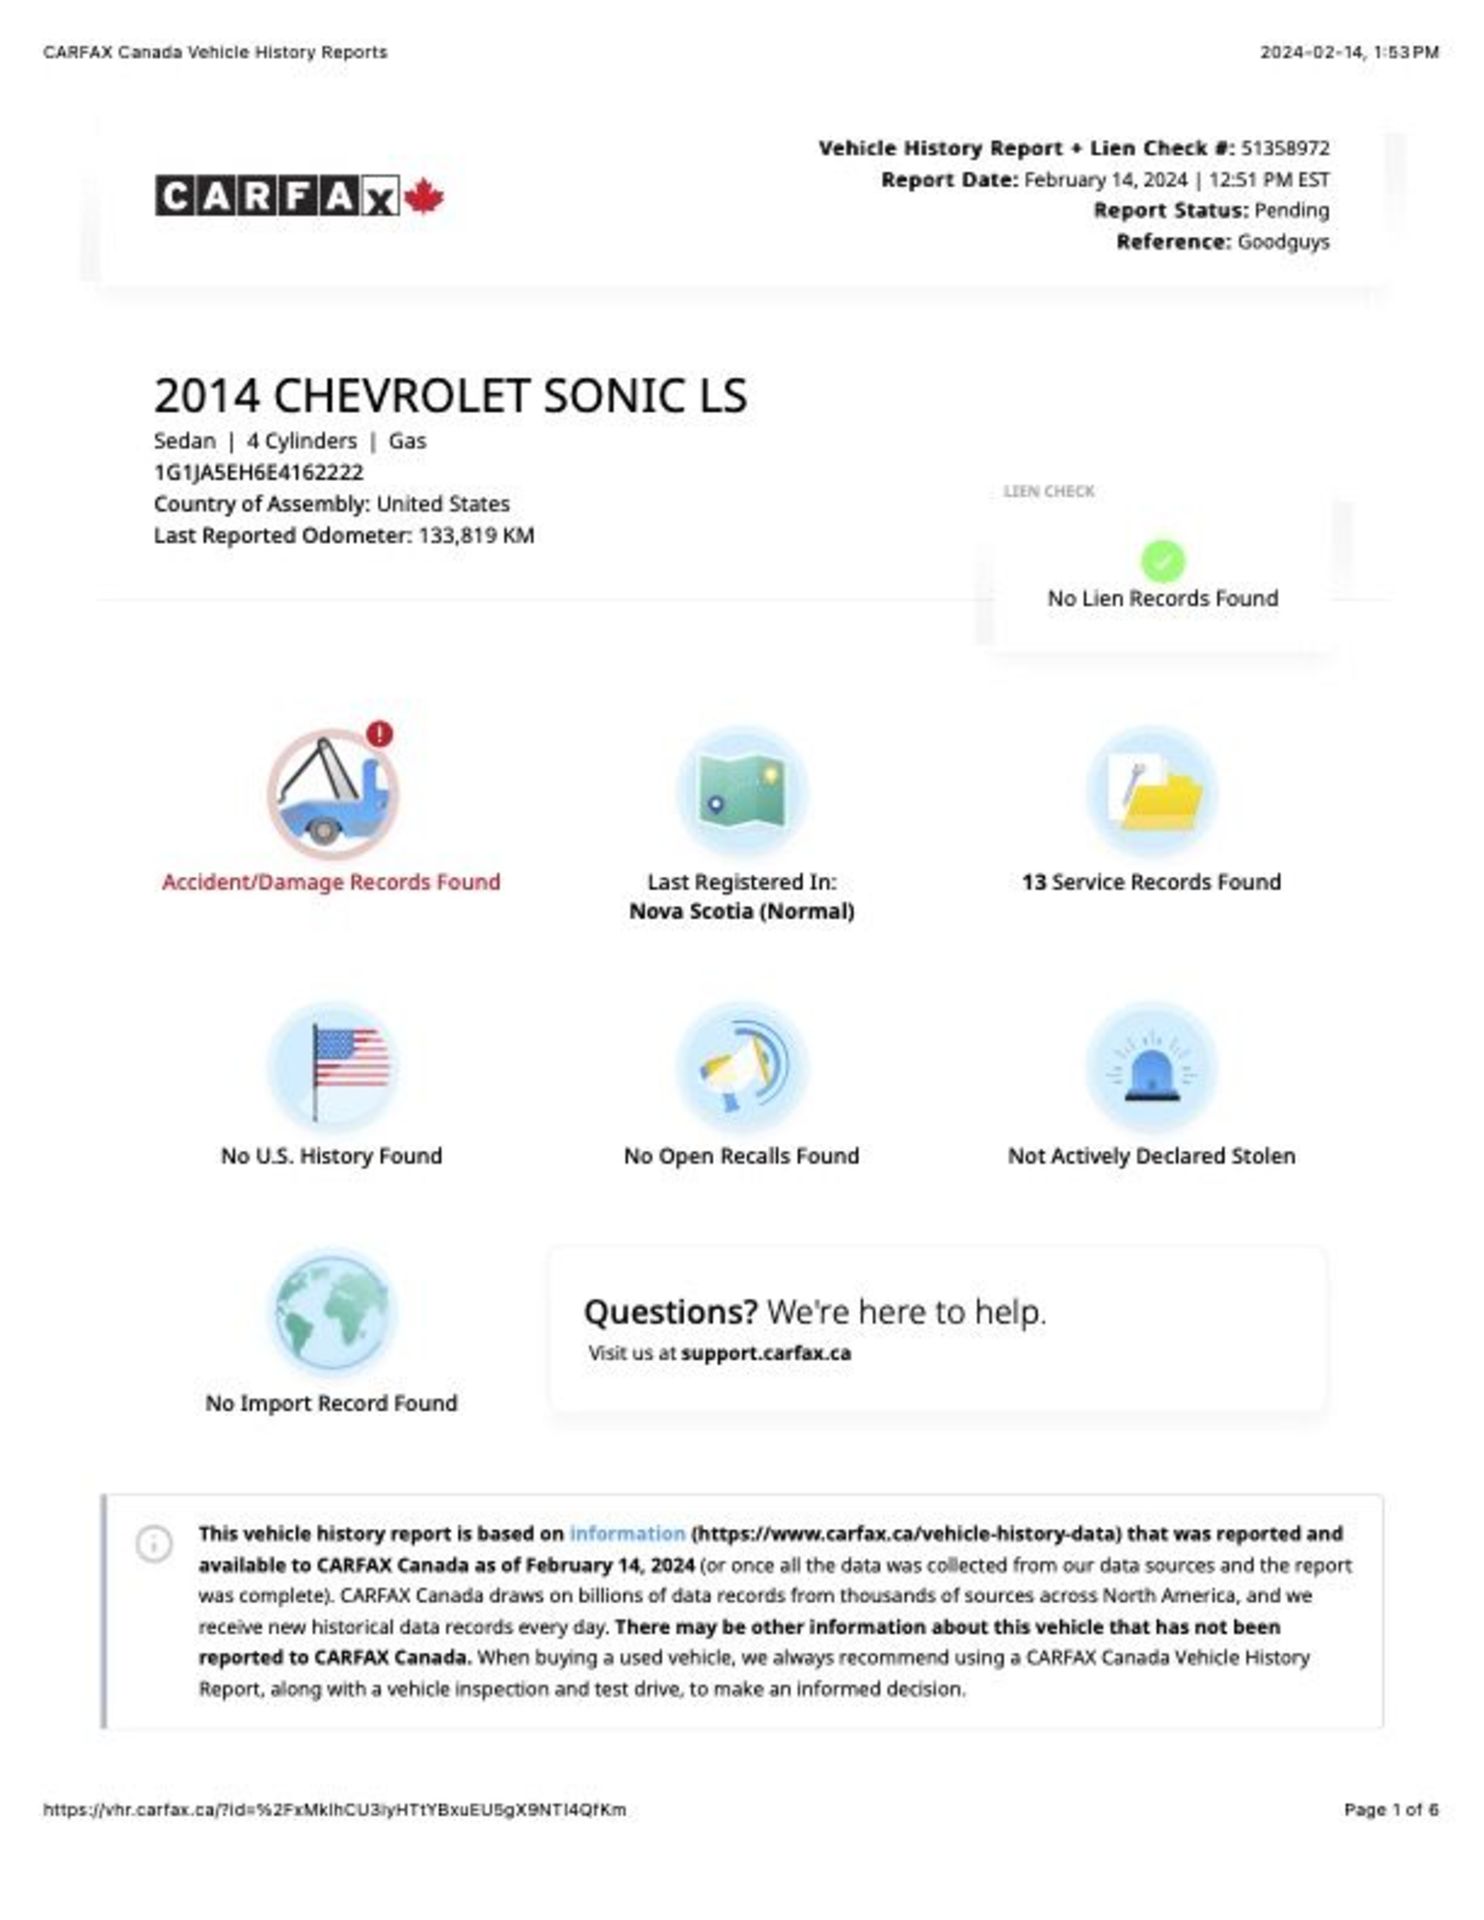 2014 Chevrolet Sonic LS - Image 9 of 14